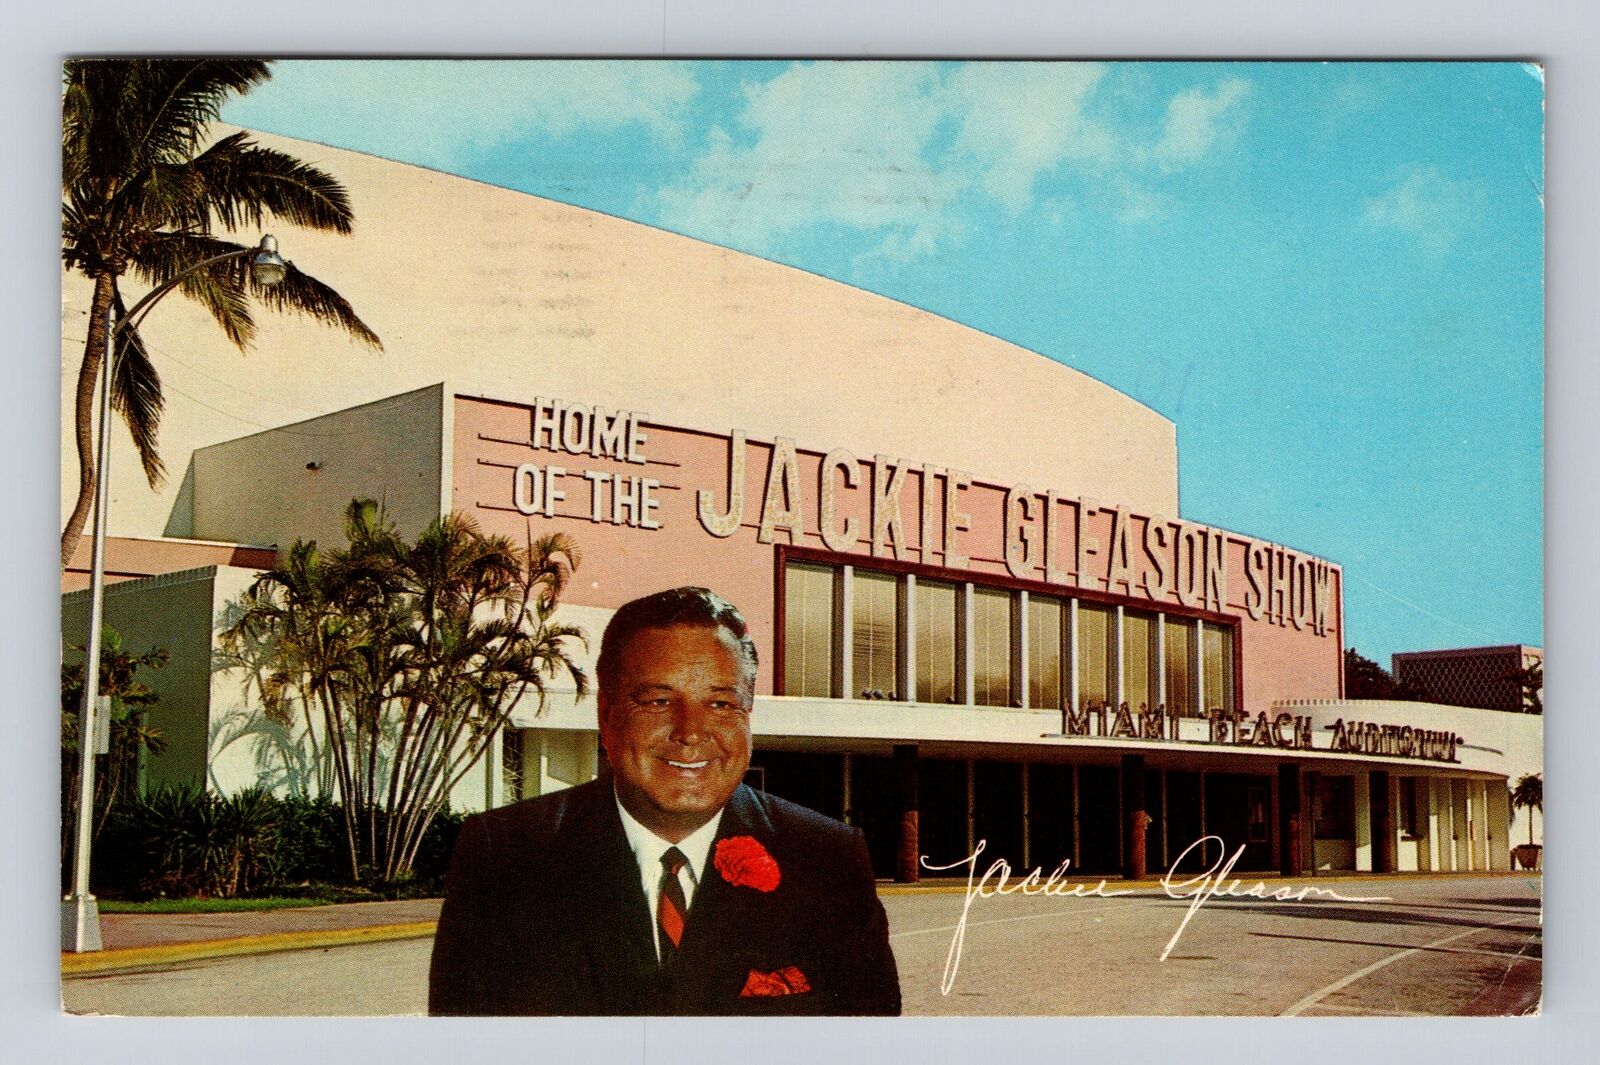 Miami Beach FL-Florida Jackie Gleason Show Ticket Request Vintage c1967 Postcard